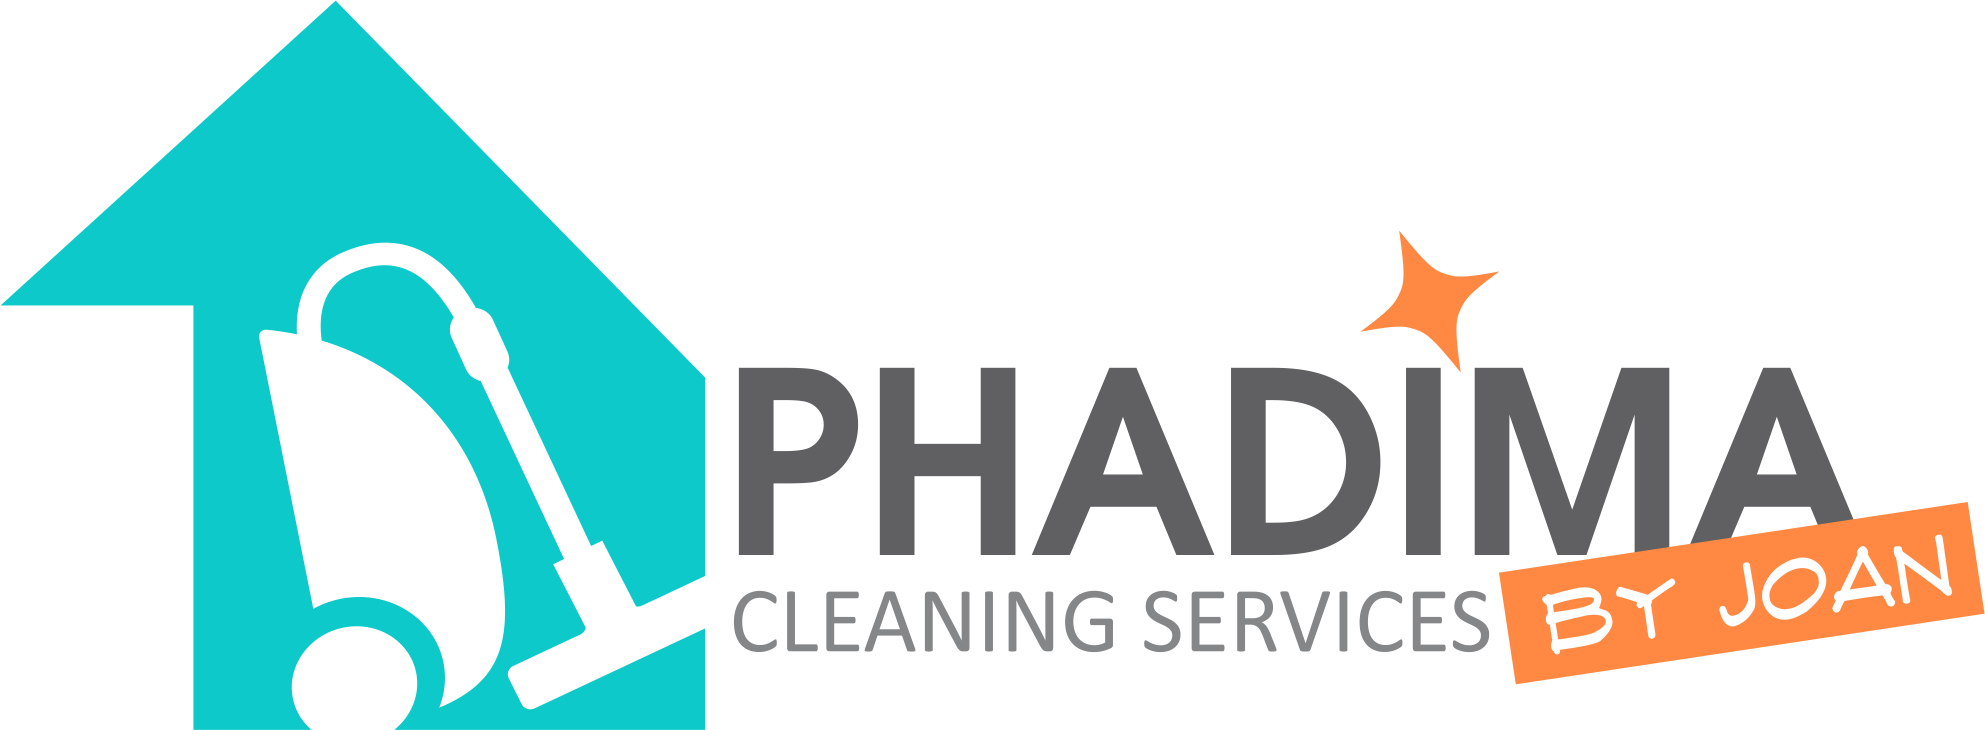 Cleaning Services In Pretoria